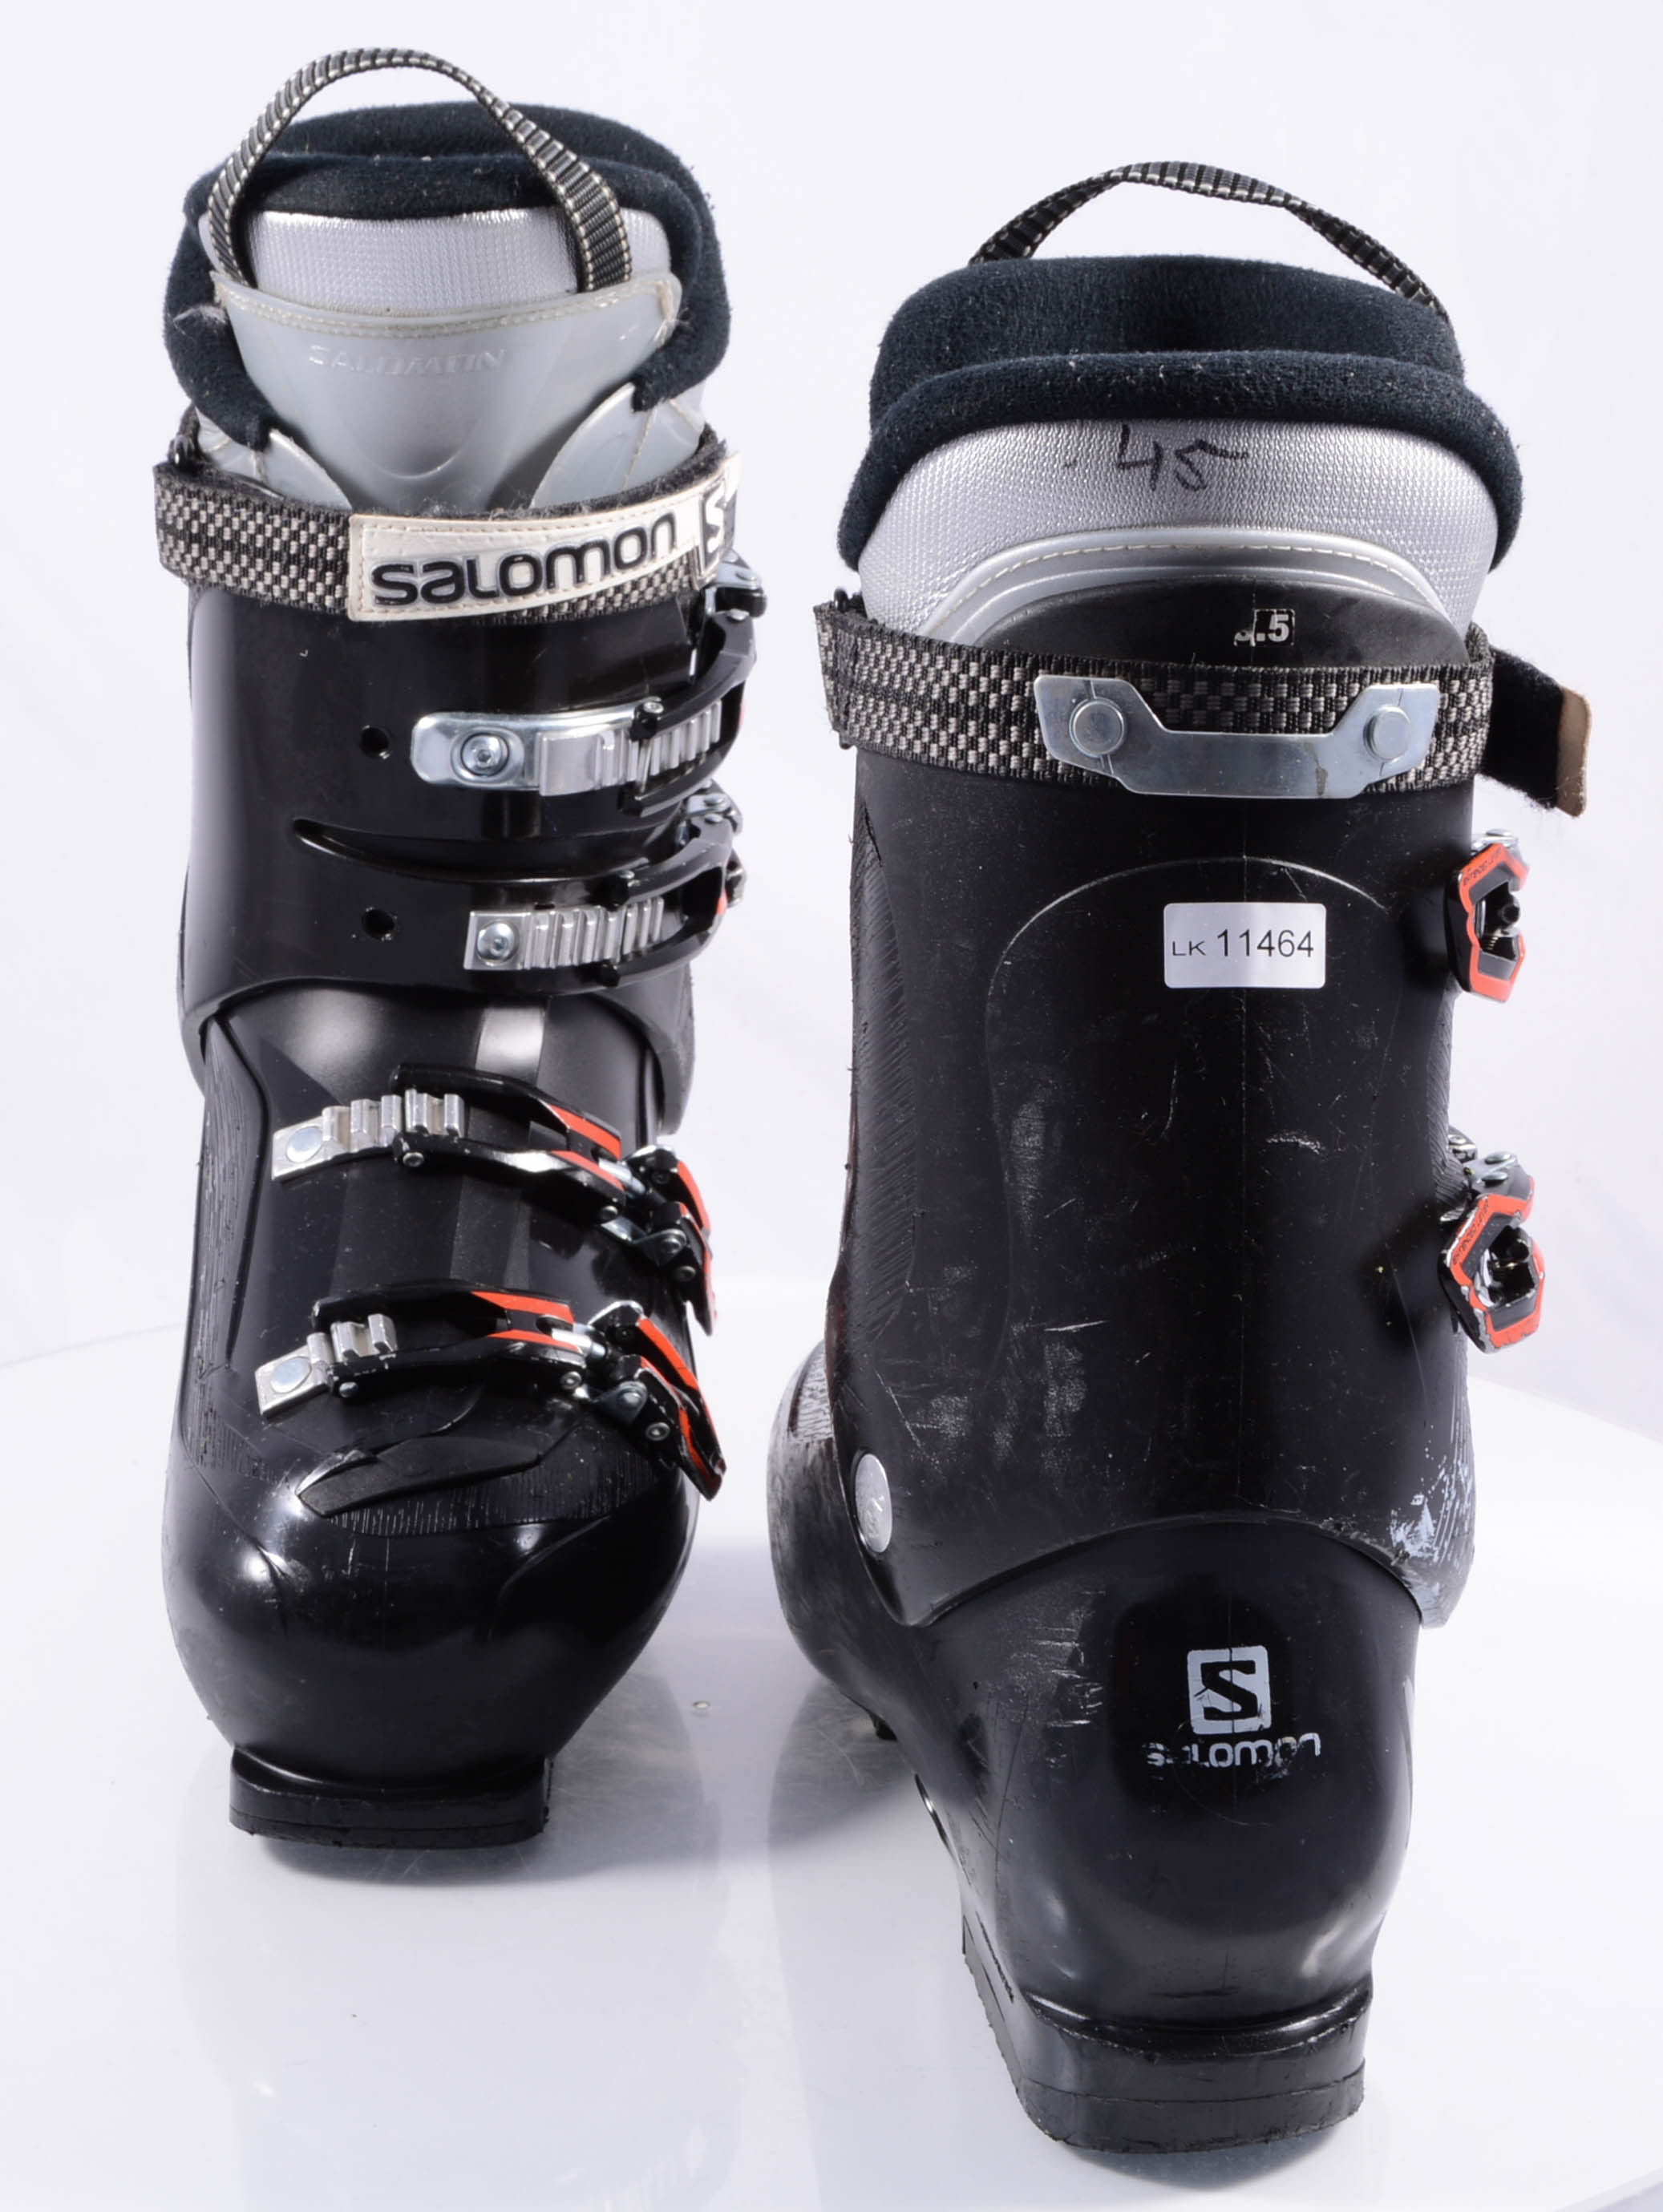 ski boots SPORT, extended lever, advanced shell - Mardosport.com